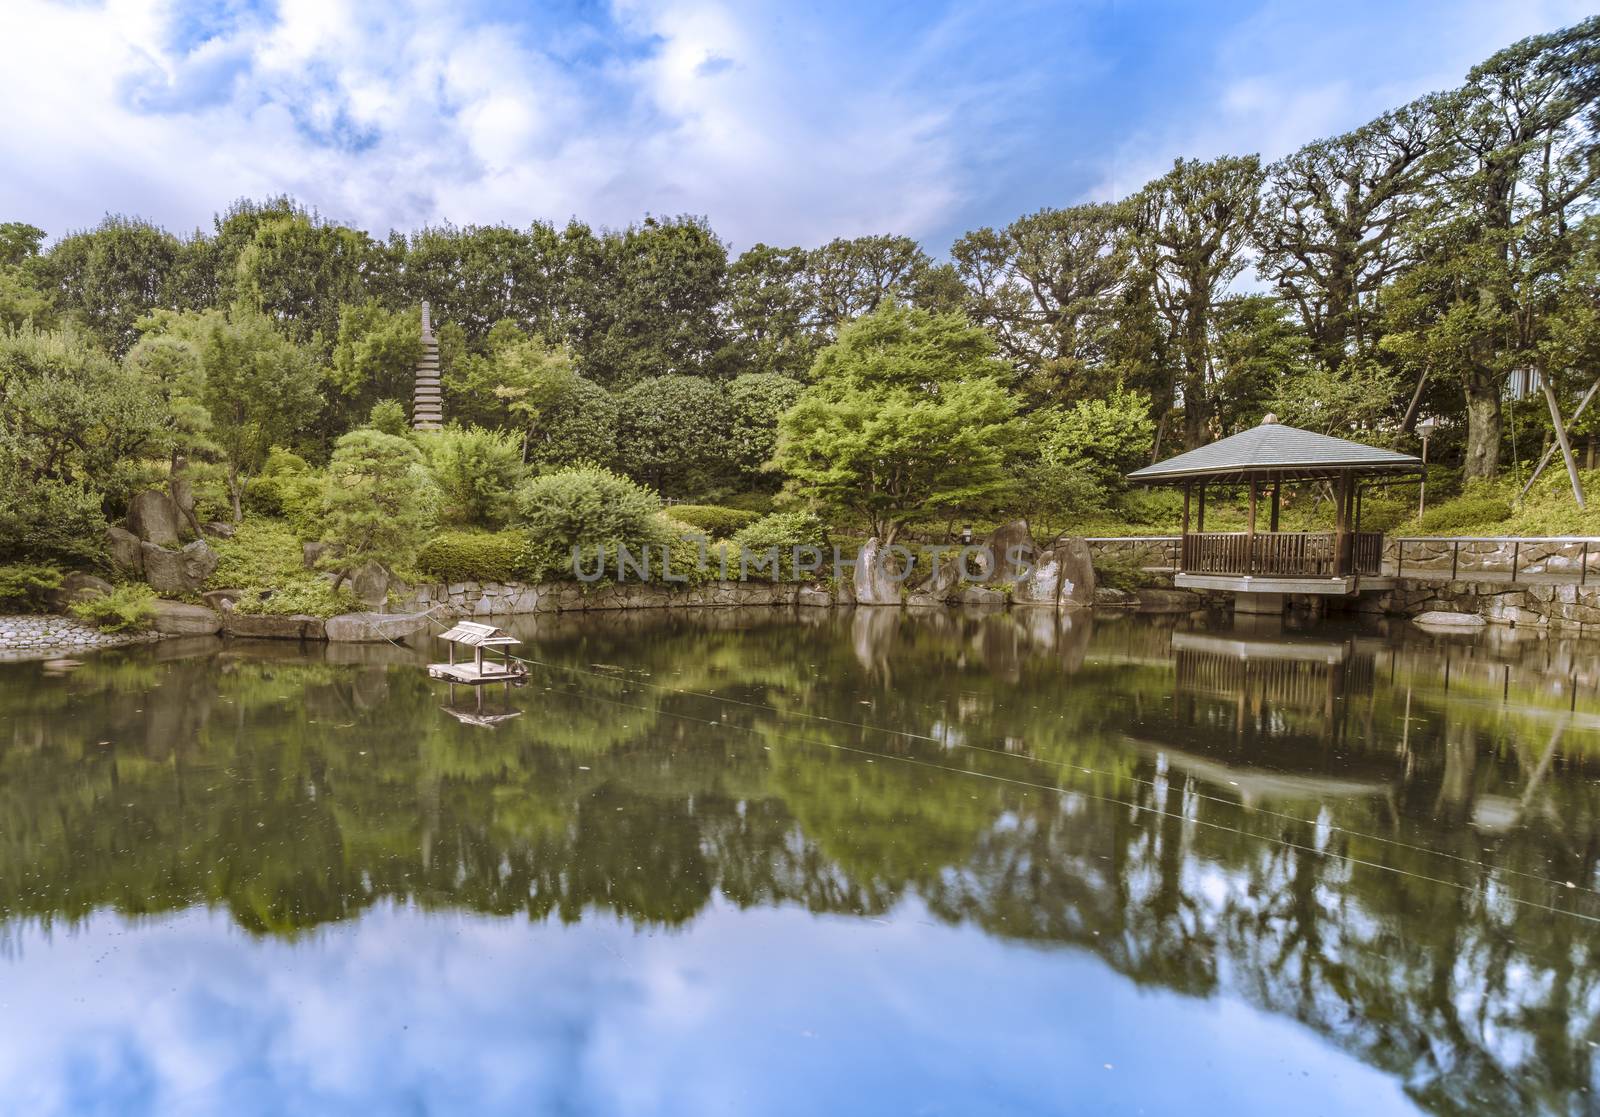 Hexagonal Gazebo Ukimido in the central pond of Mejiro Garden by kuremo